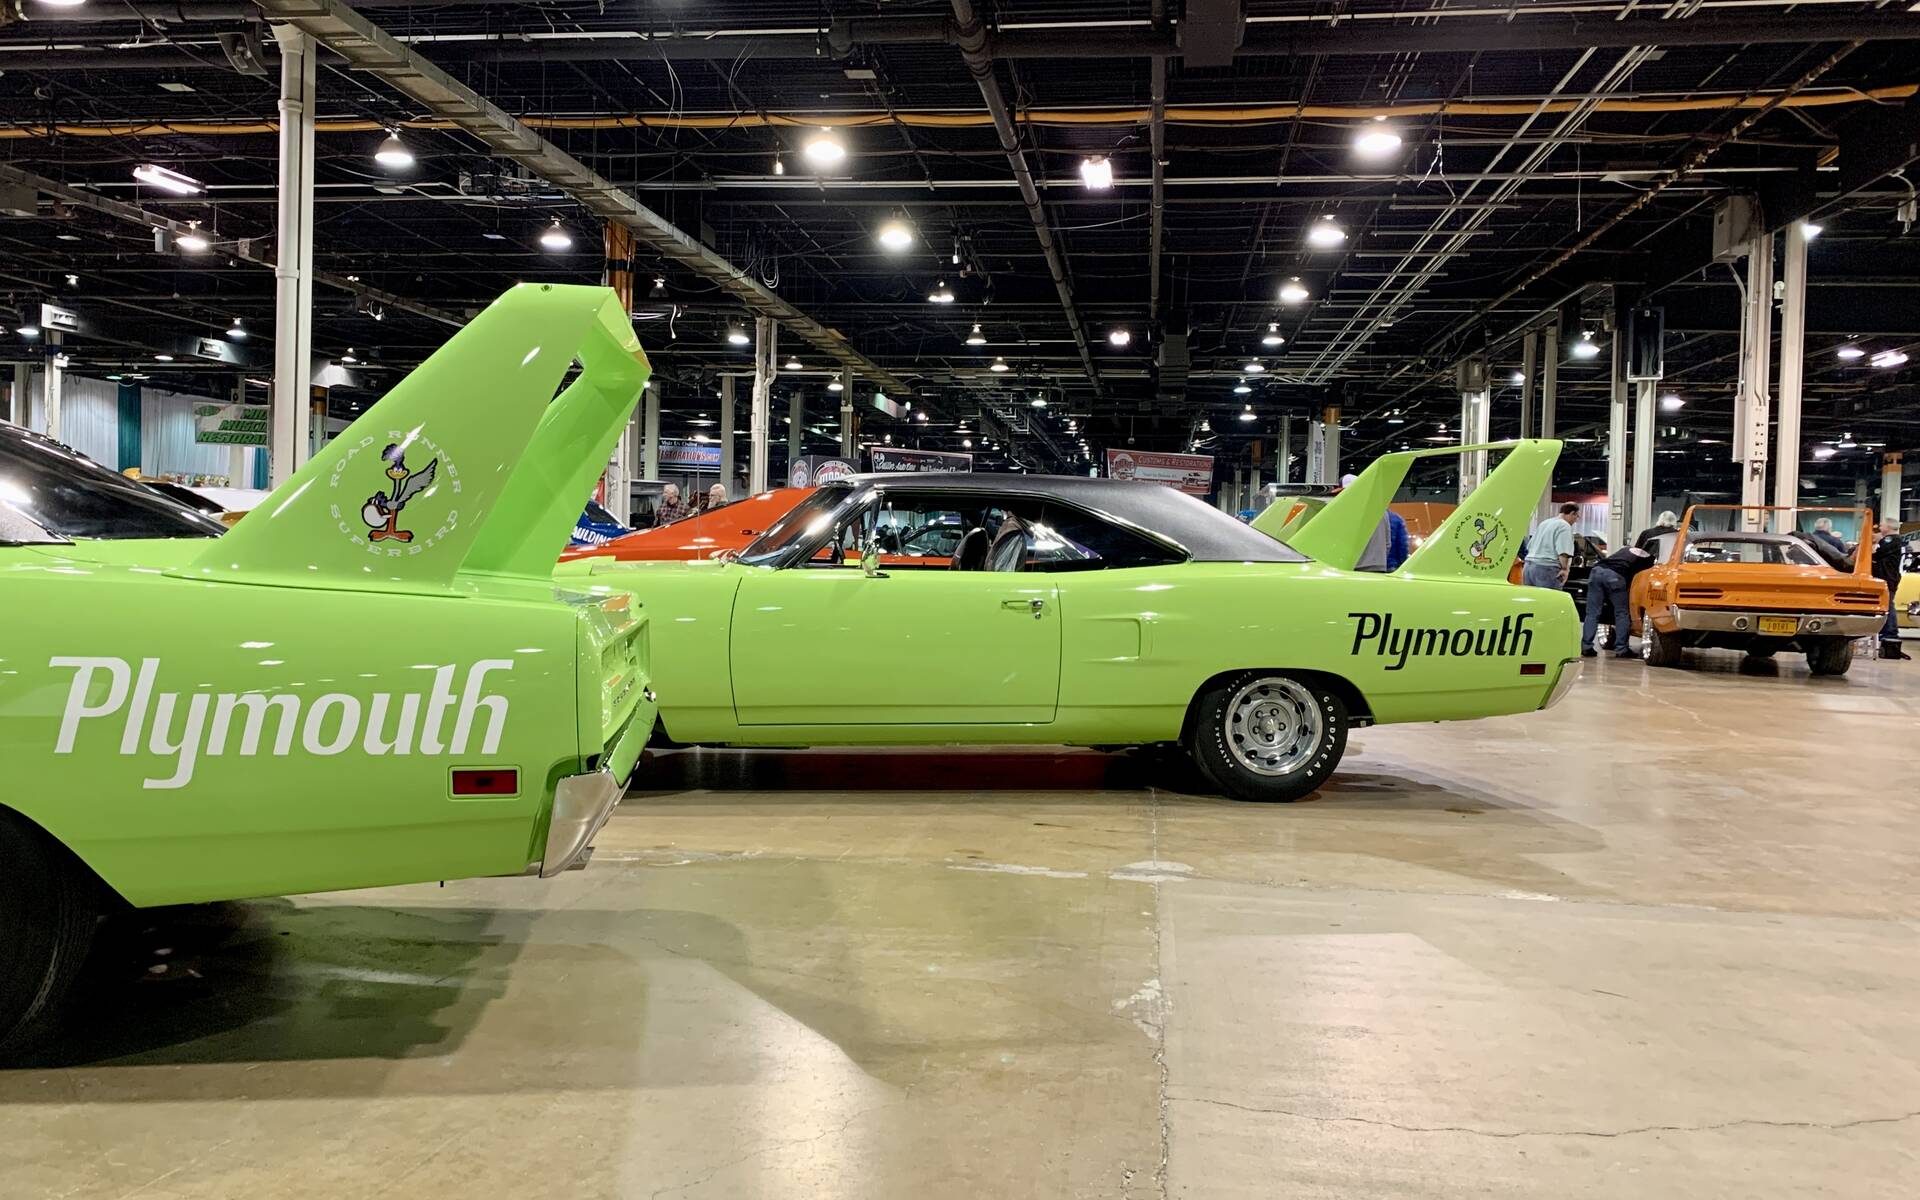 Plusieurs dizaines de Plymouth Superbird et Dodge Charger Daytona réunies à Chicago 551461-plusieurs-dizaines-de-plymouth-superbird-et-dodge-charger-daytona-reunies-a-chicago